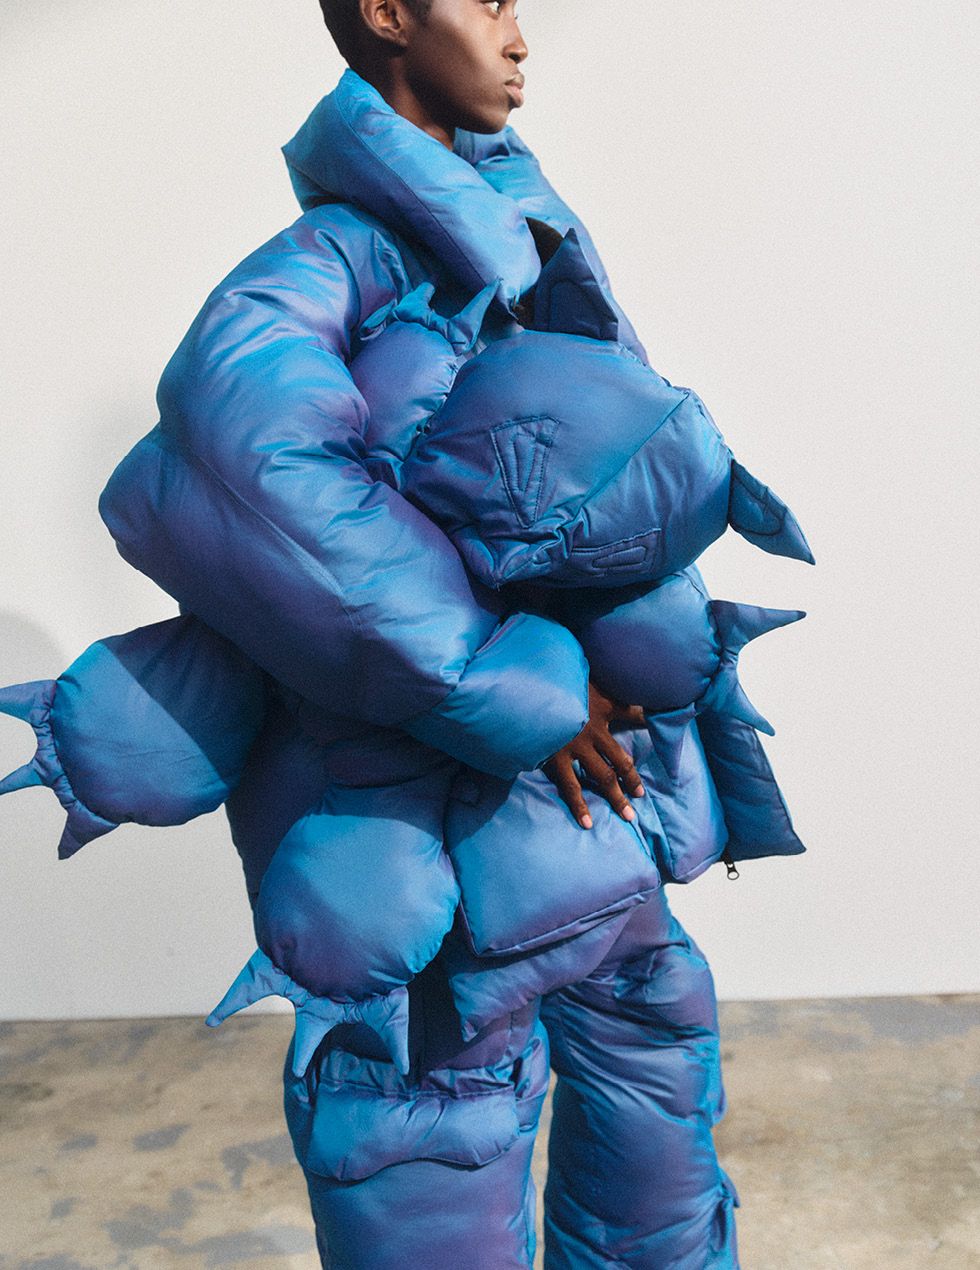 a person in a blue garment